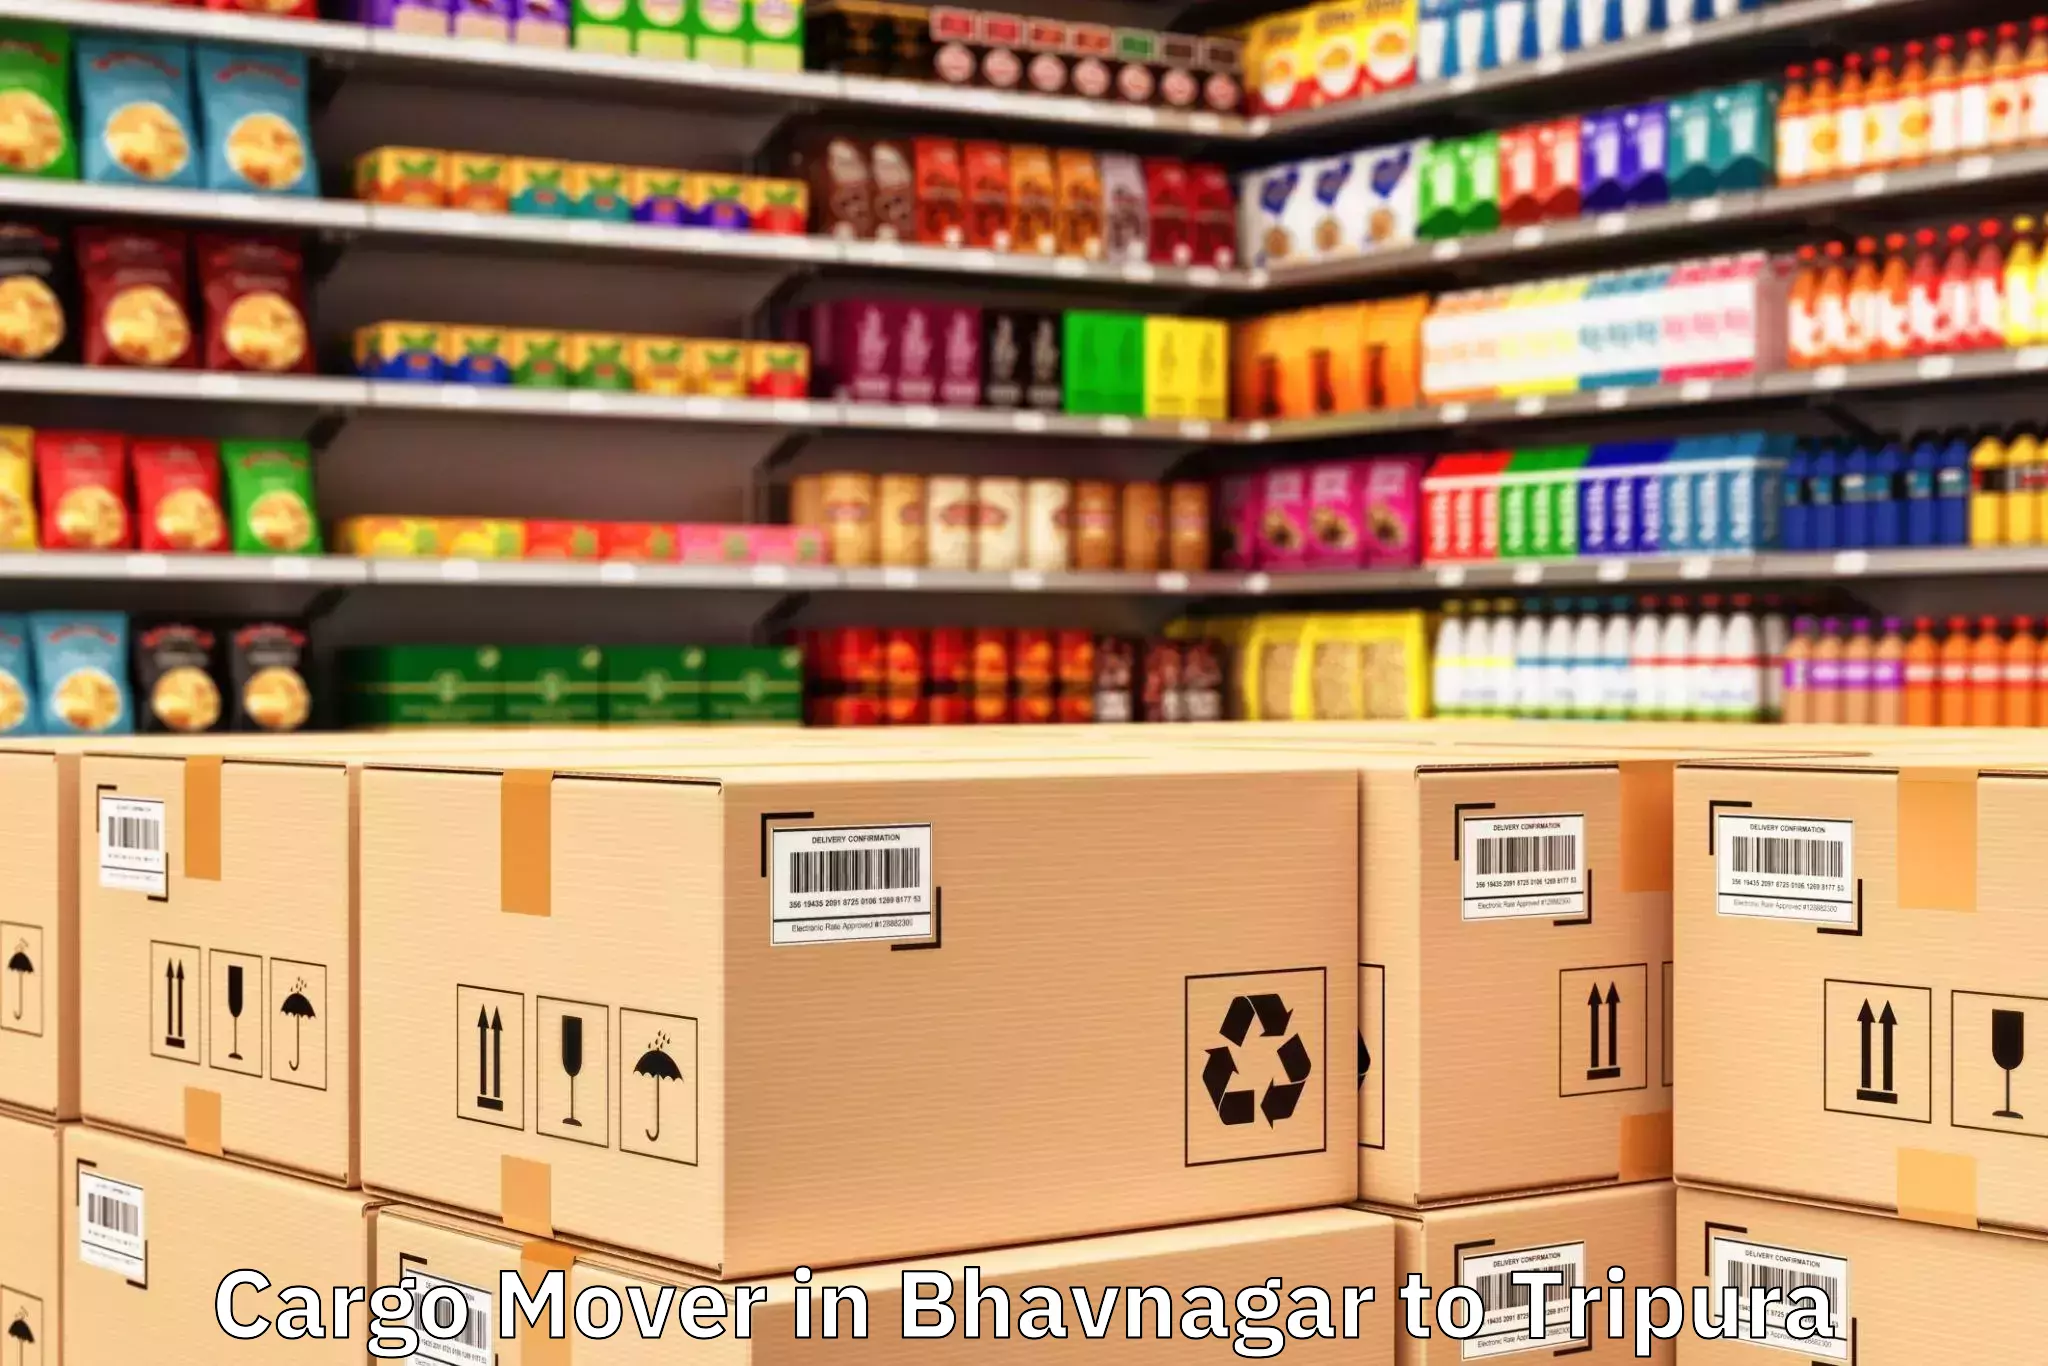 Top Bhavnagar to Tripura Cargo Mover Available